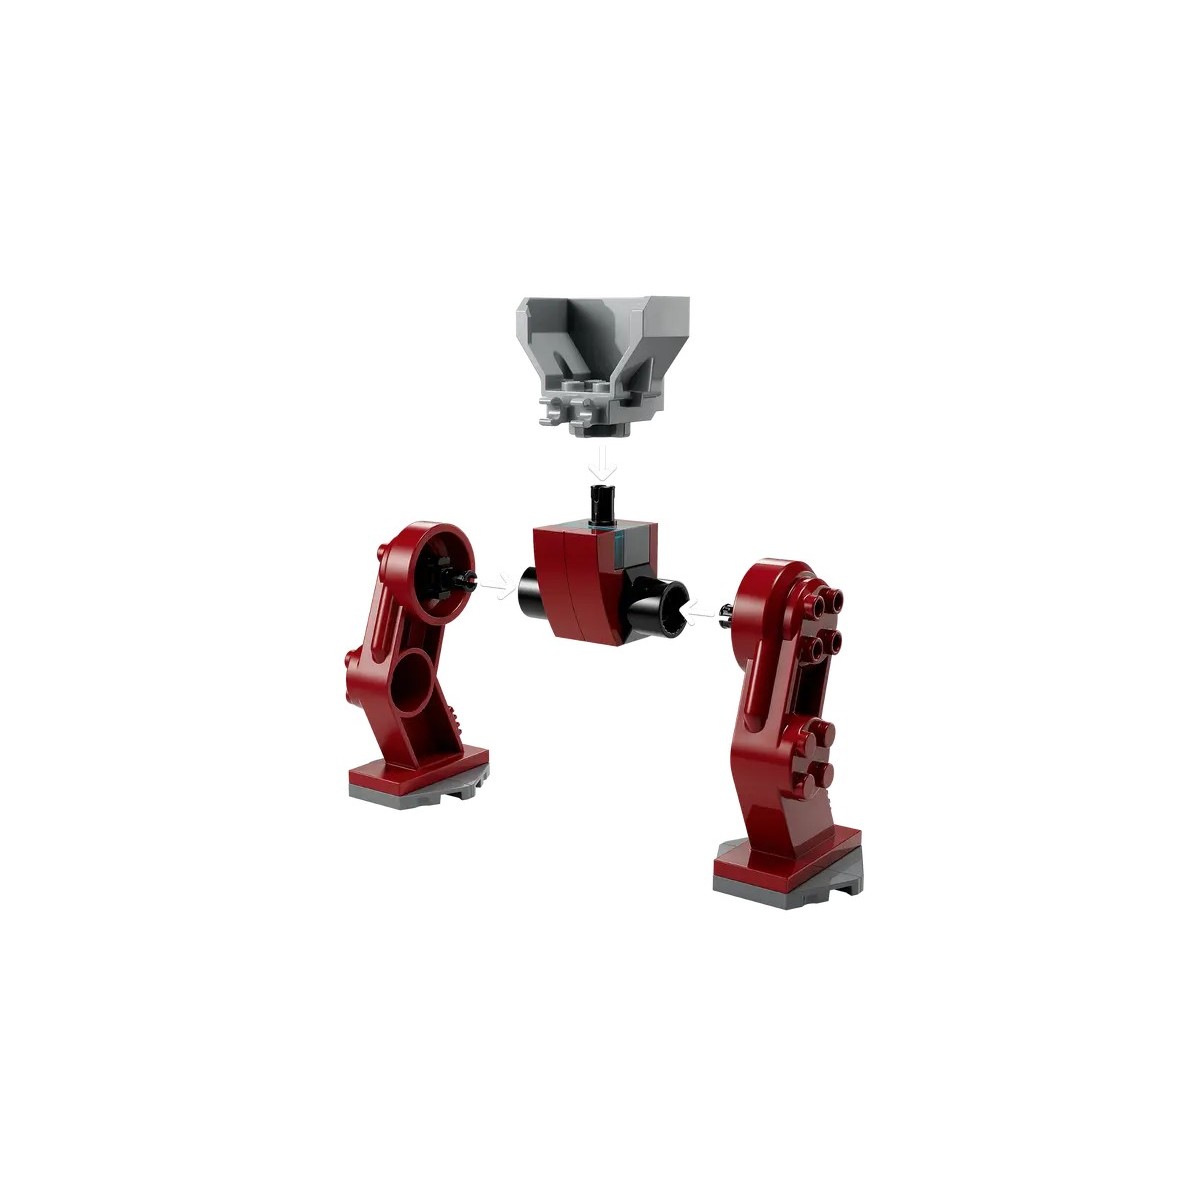 LEGO MARVEL IRON MAN HULKBUSTER VS. THANOS /76263/